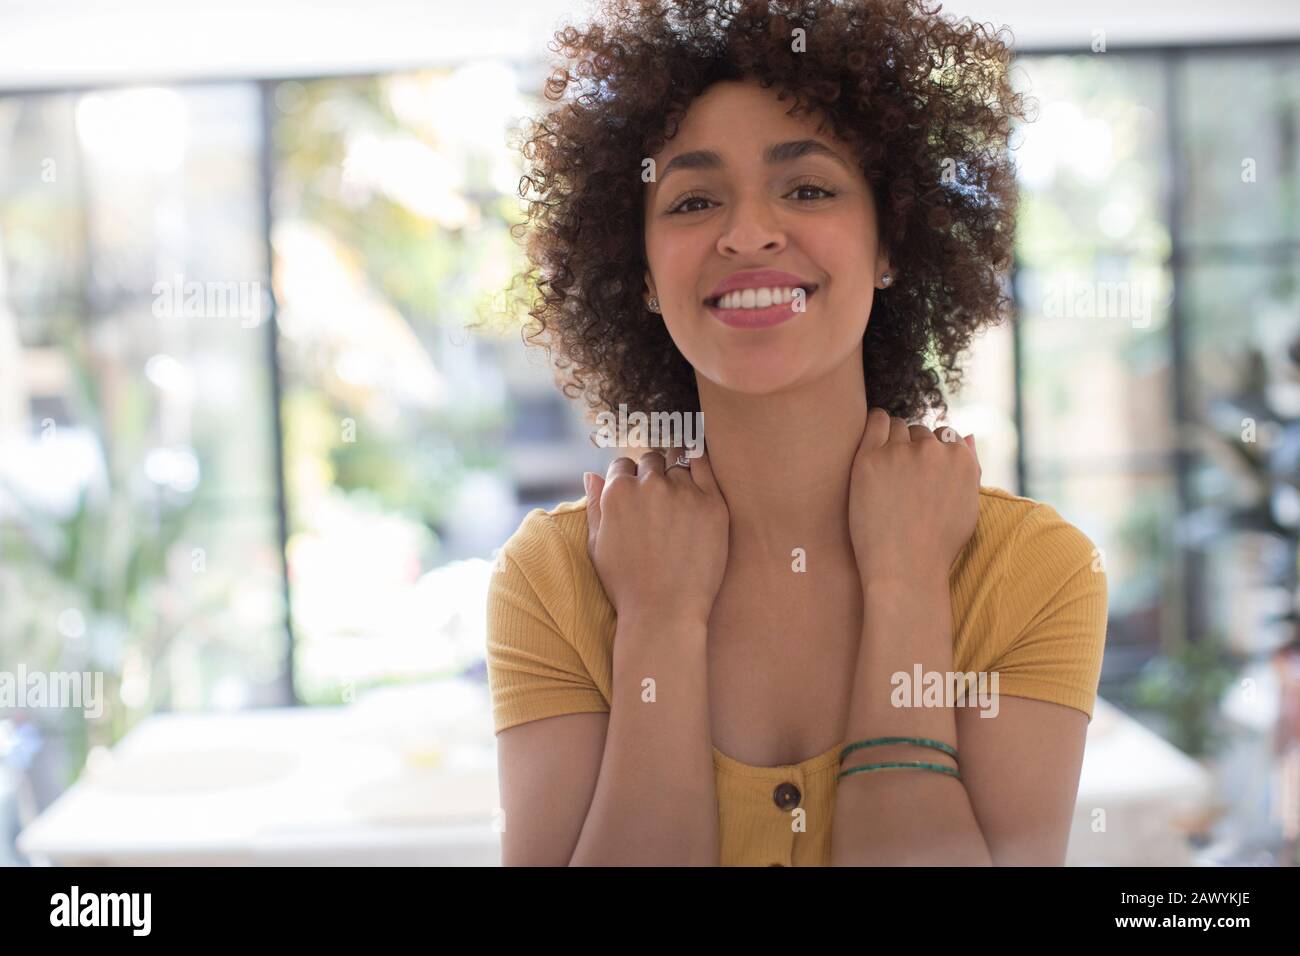 Portrait confident smiling young woman Stock Photo